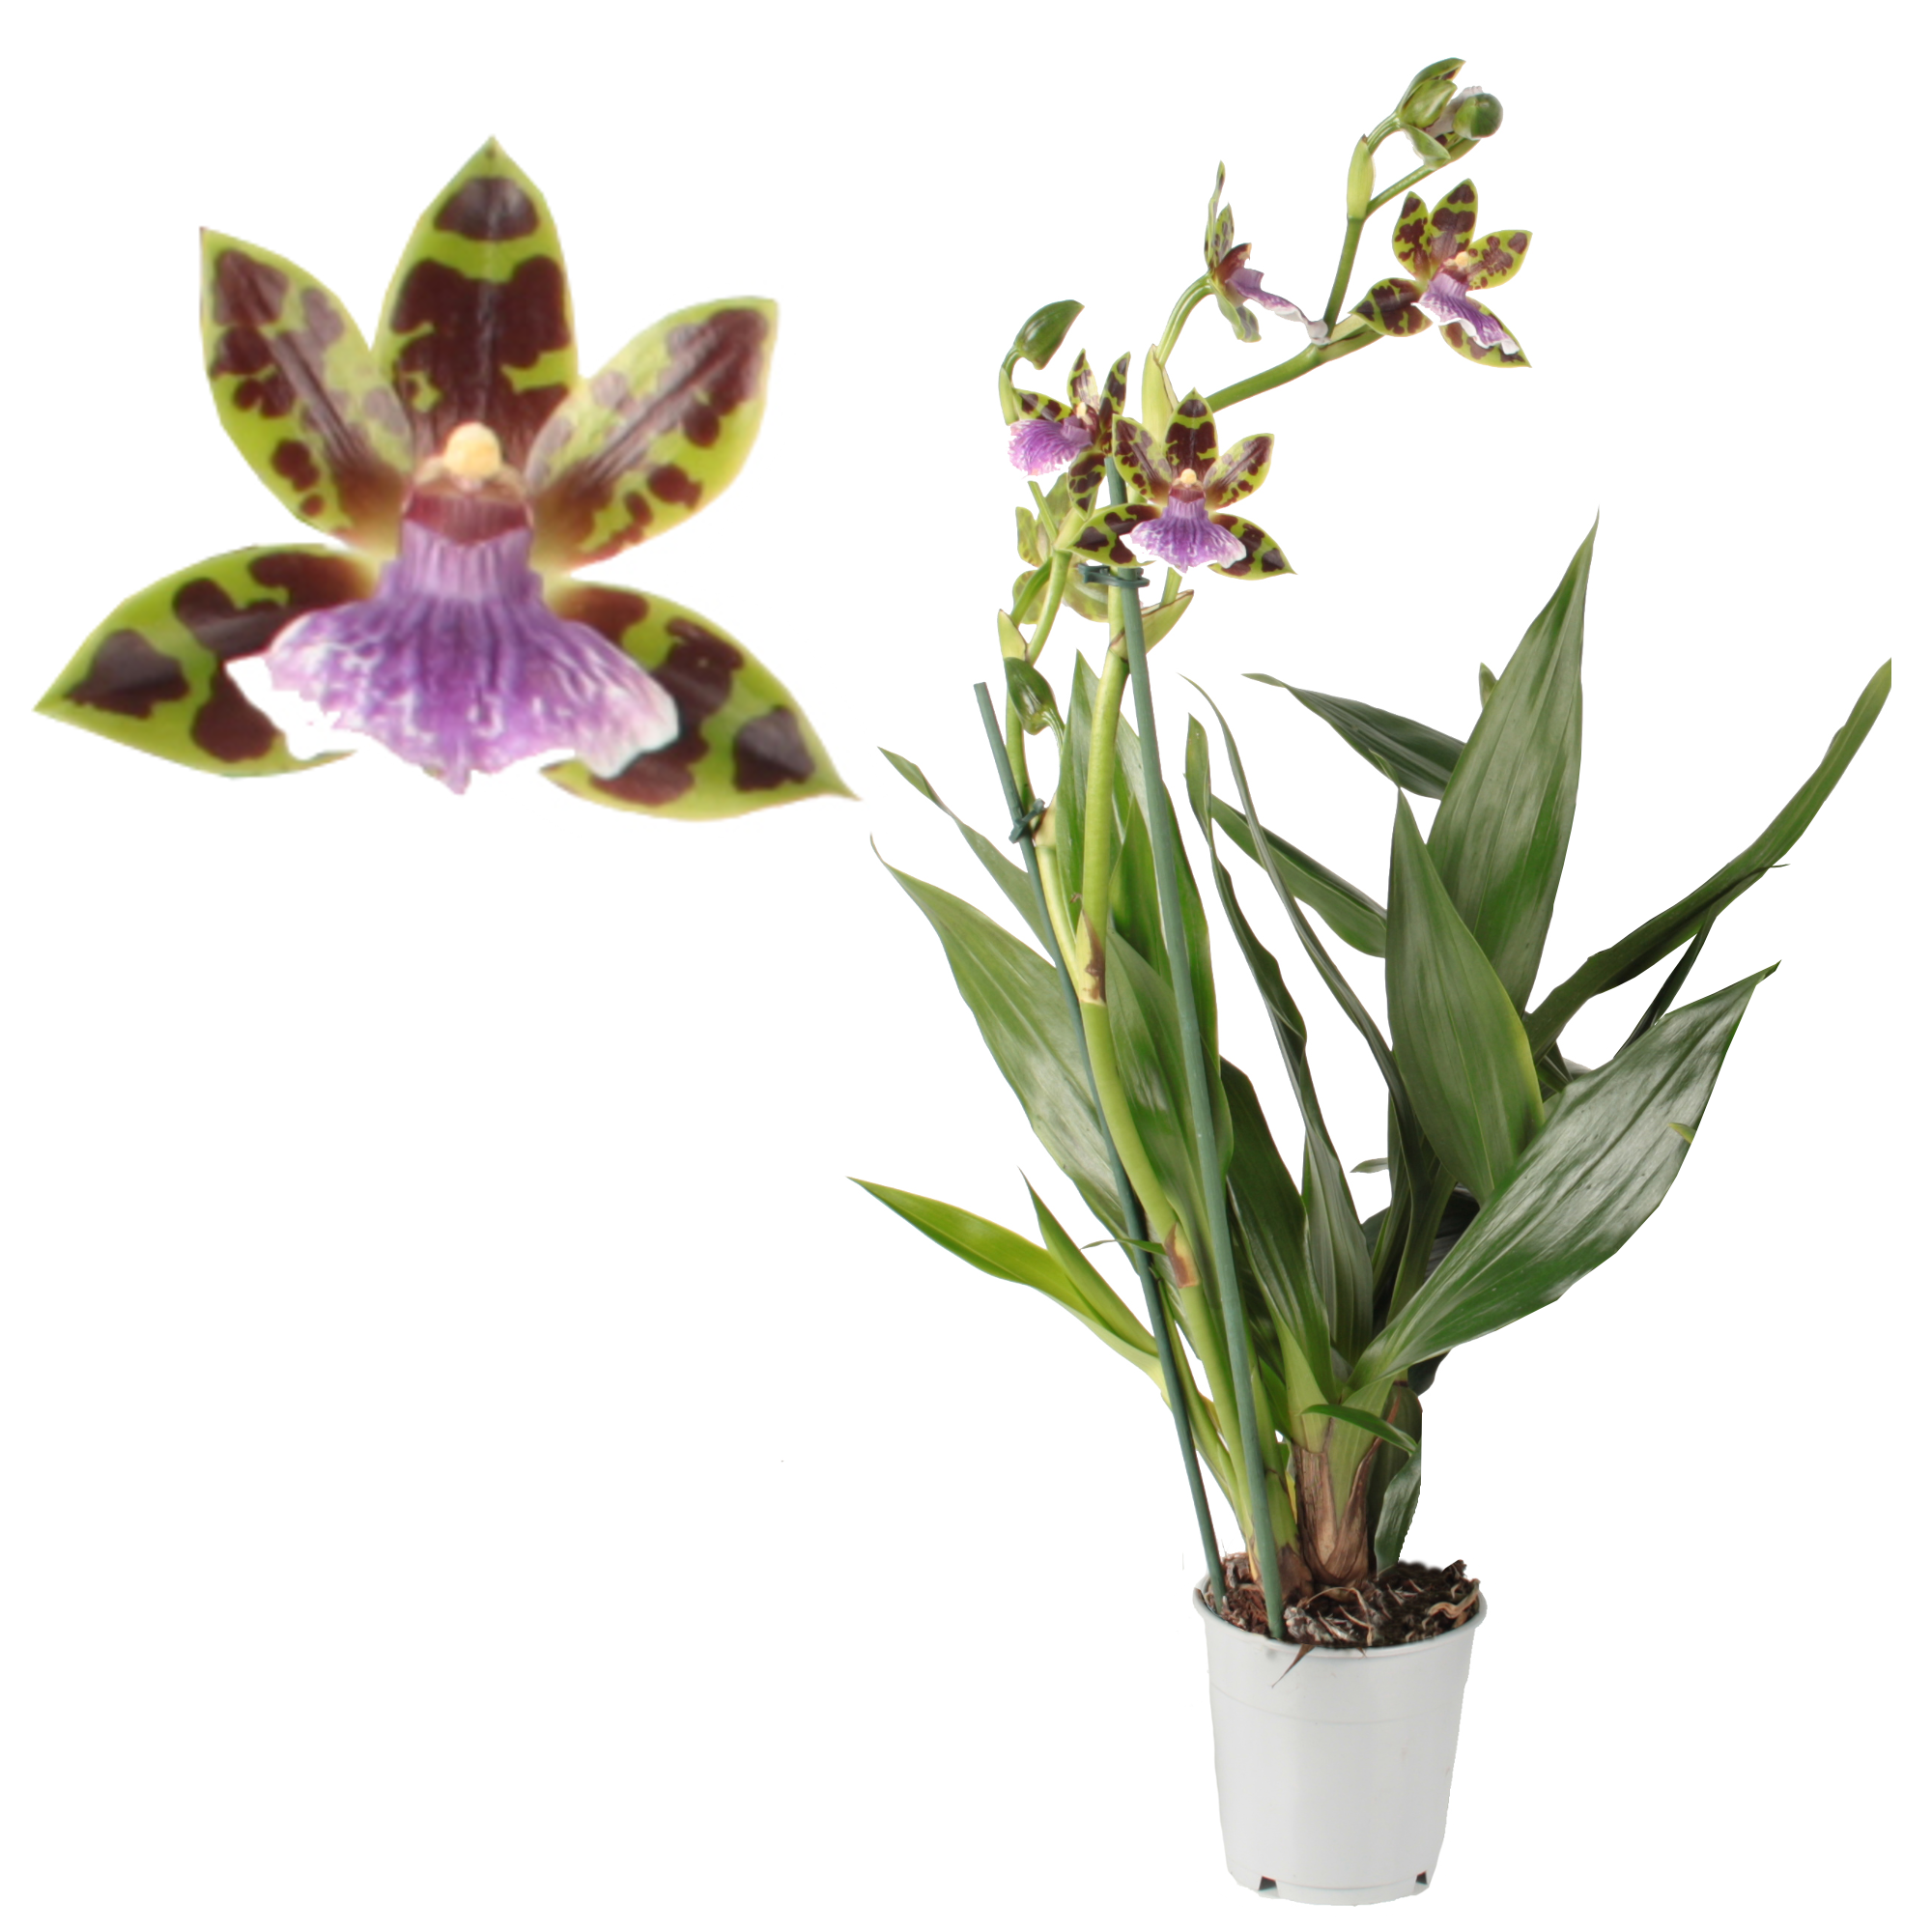 Zygopetalum-Orchidee 2 Rispen lila/weiß, 12 cm Topf + product picture